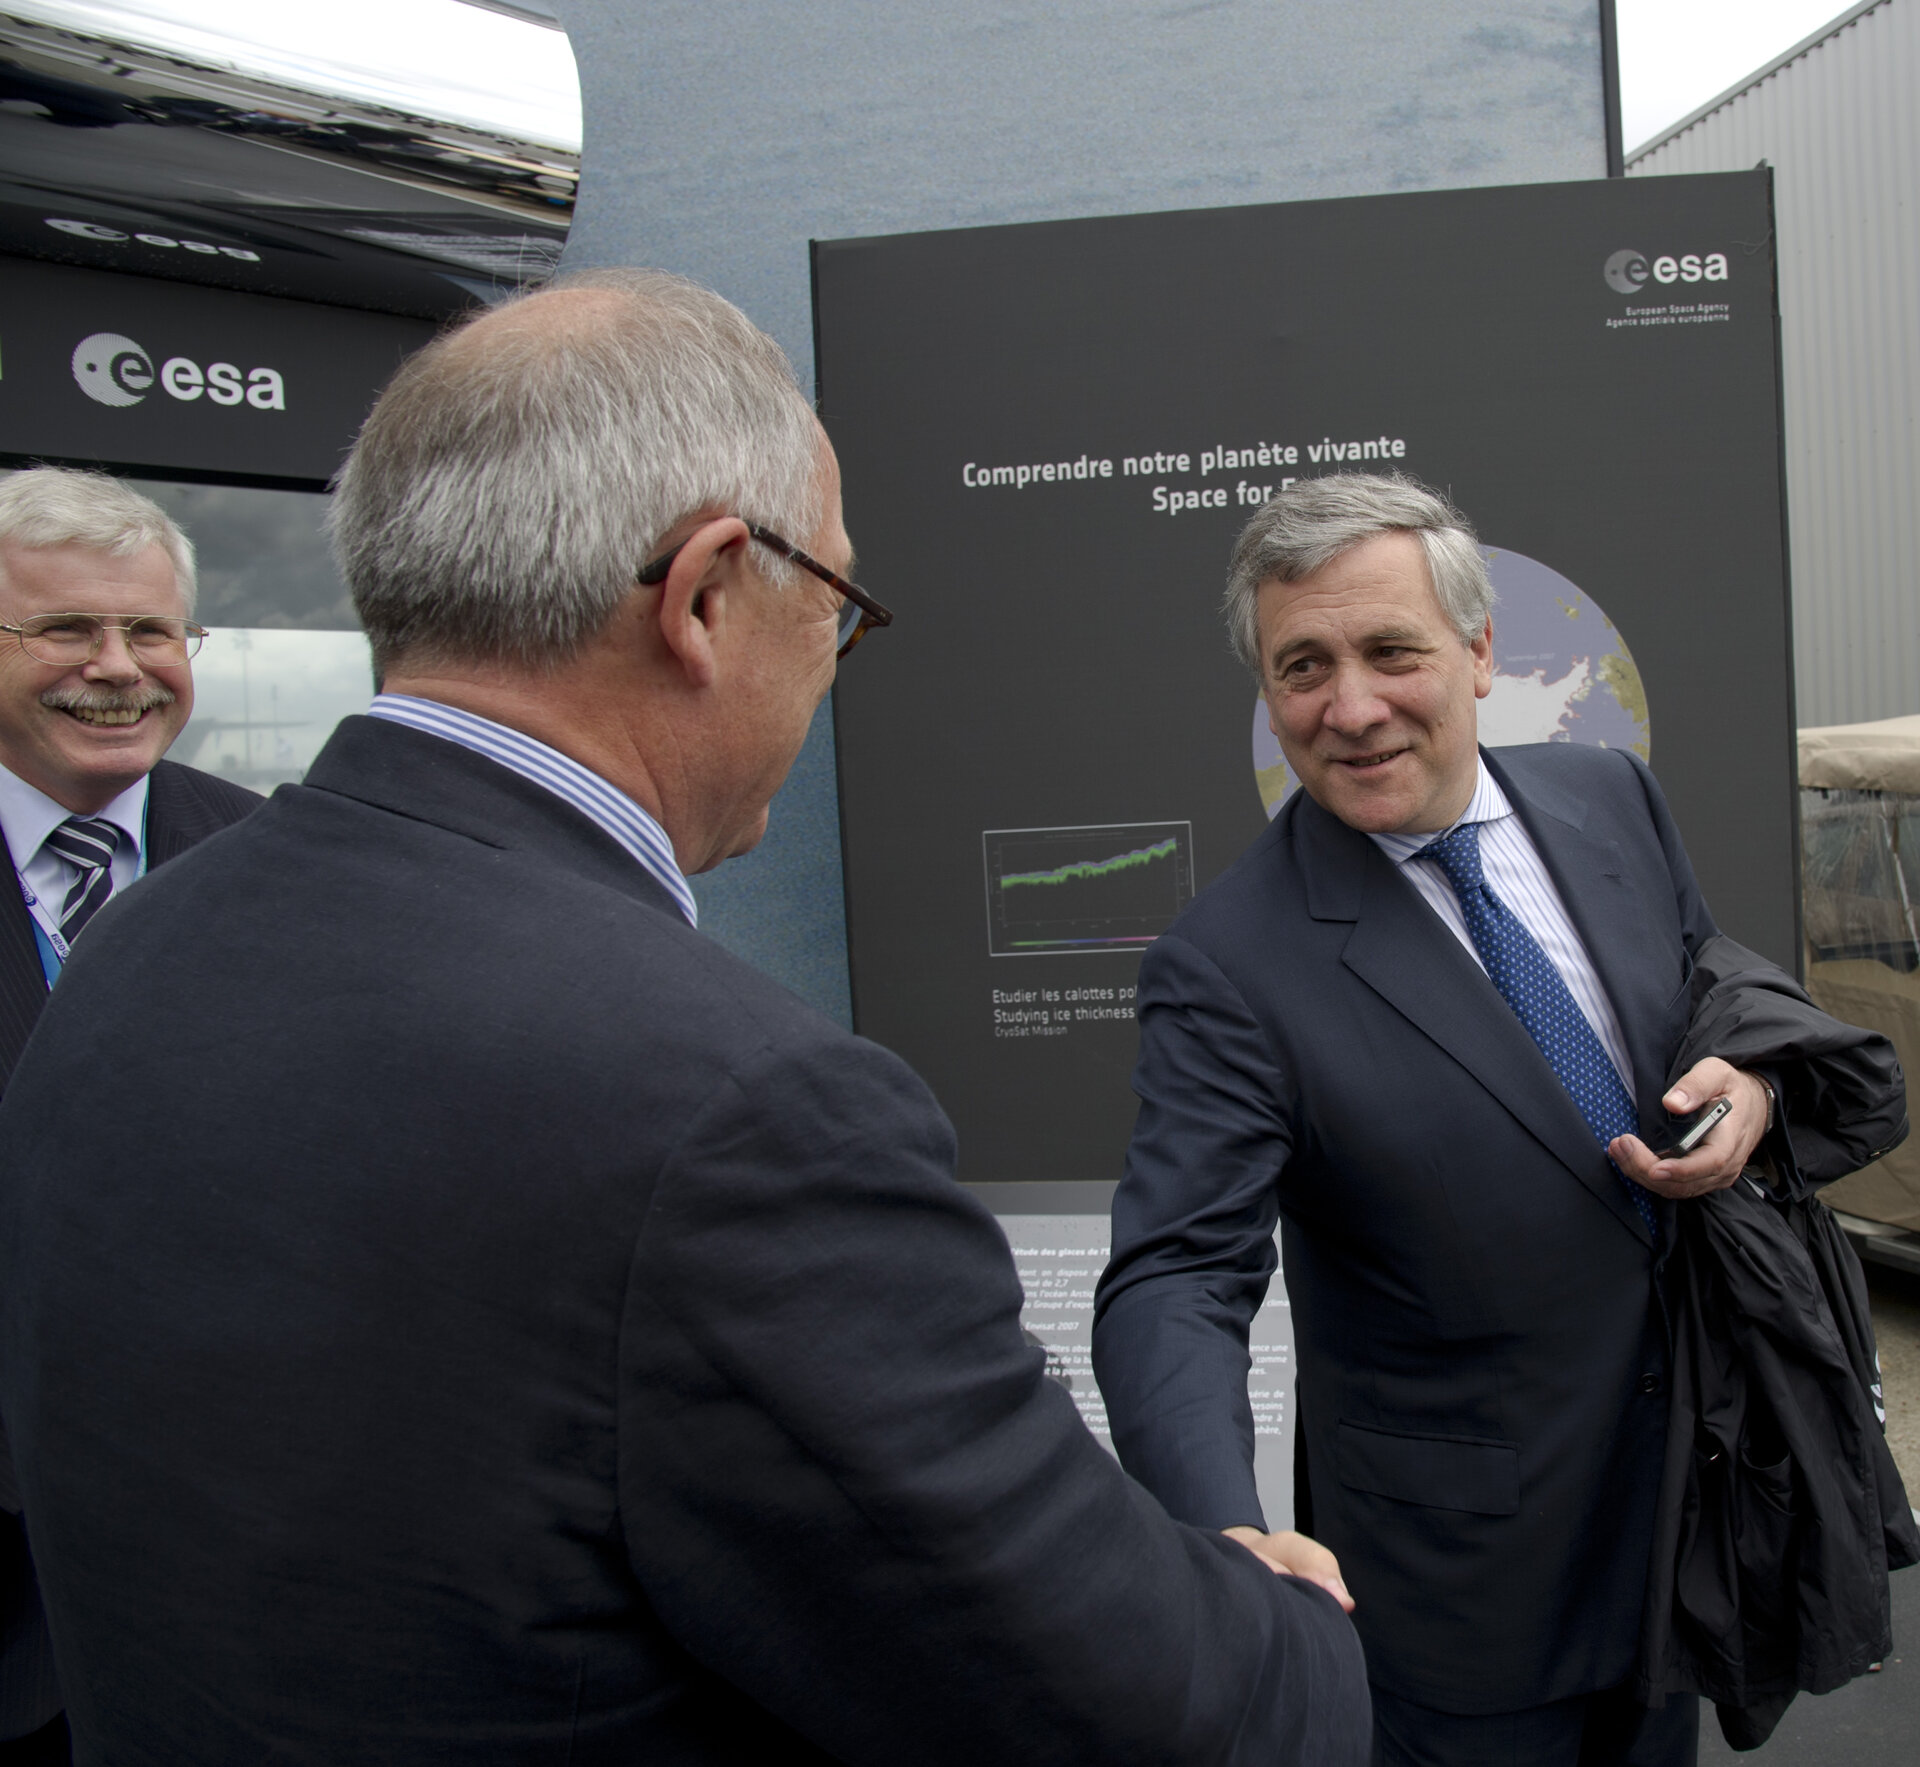 Jean-Jacques Dordain welcomes Antonio Tajani to the ESA pavilion